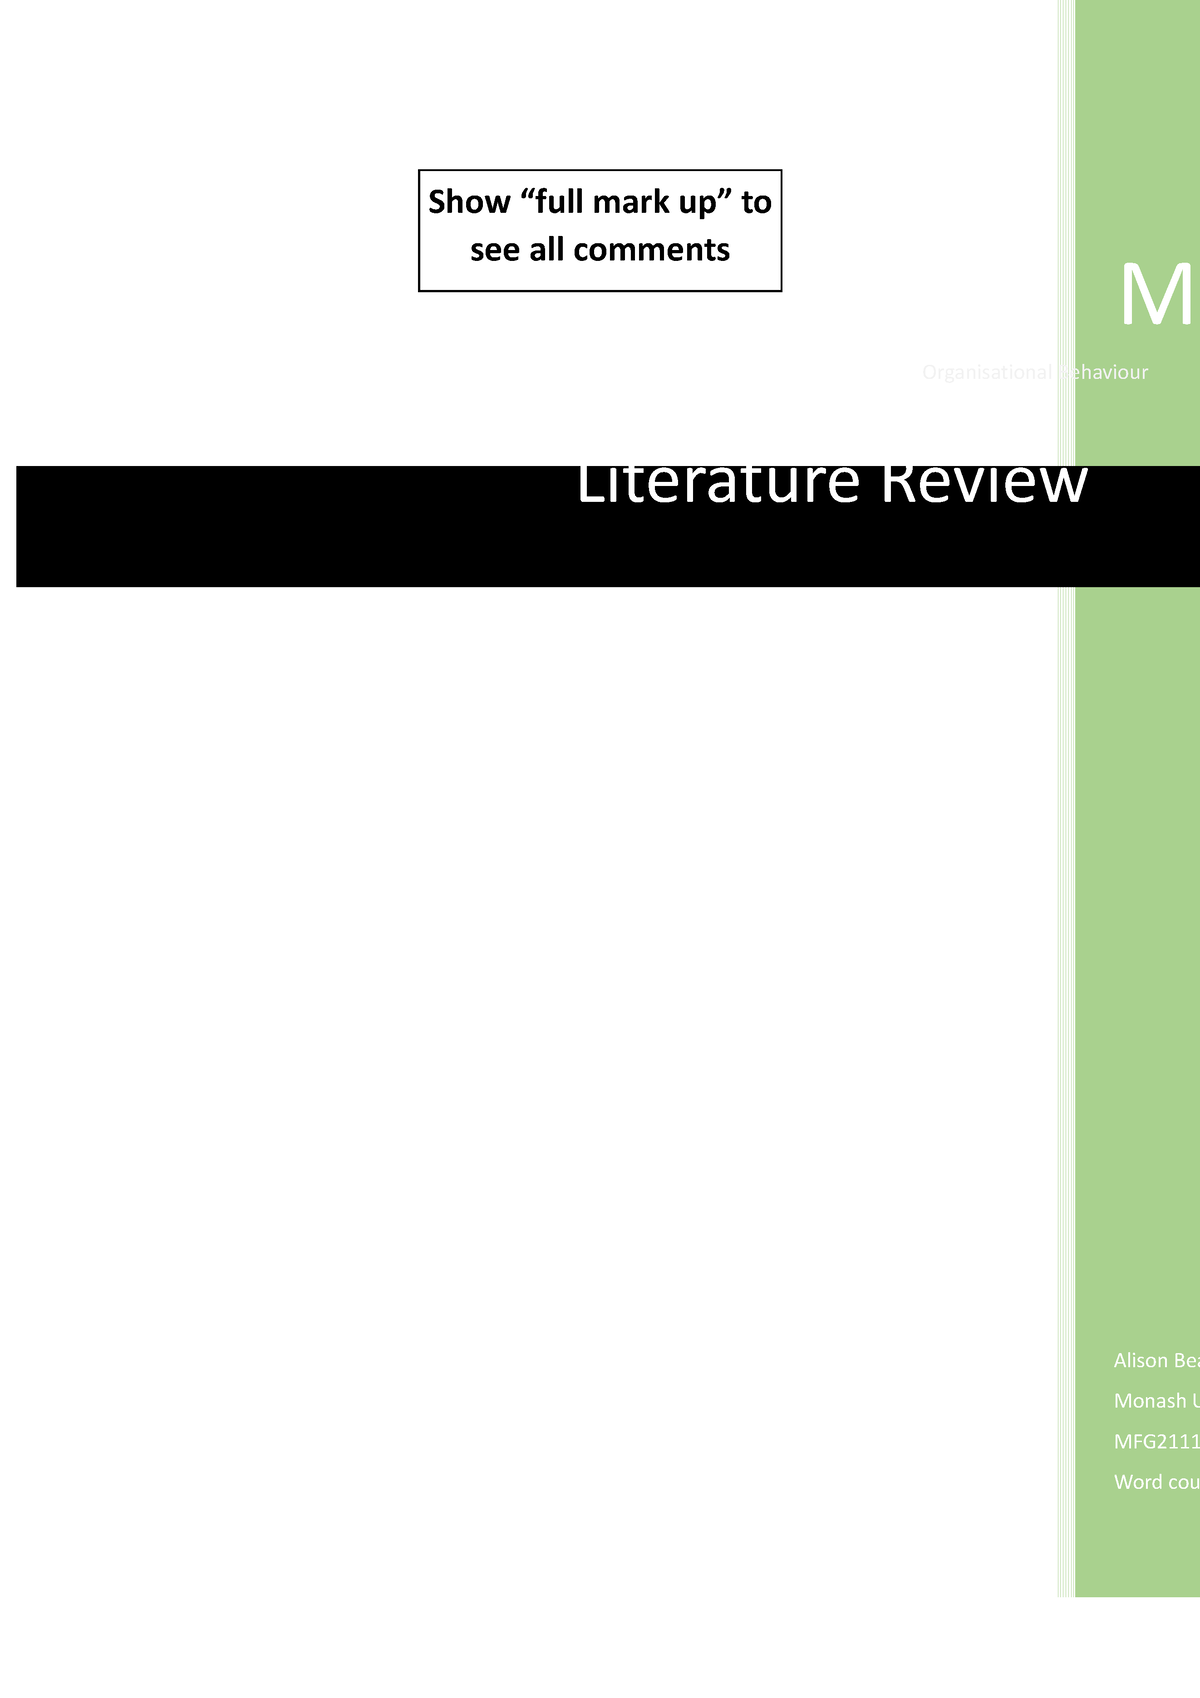 monash university literature review